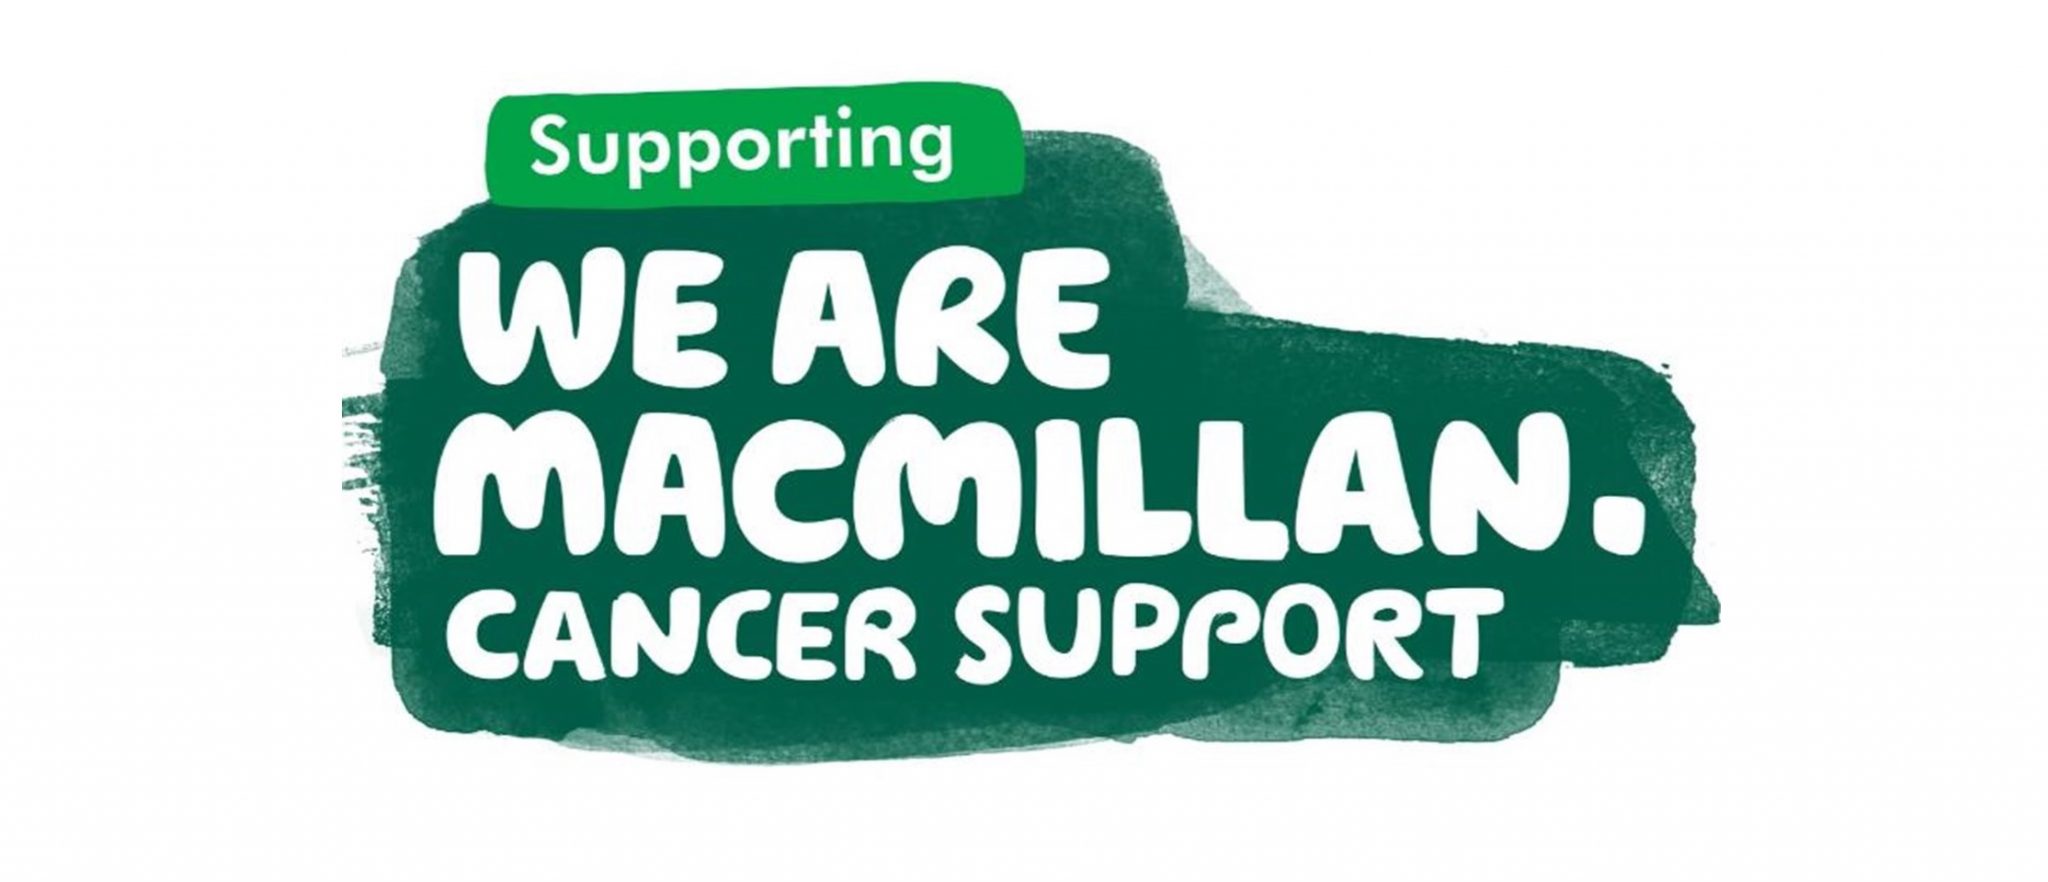 Petrico supports Macmillan Cancer